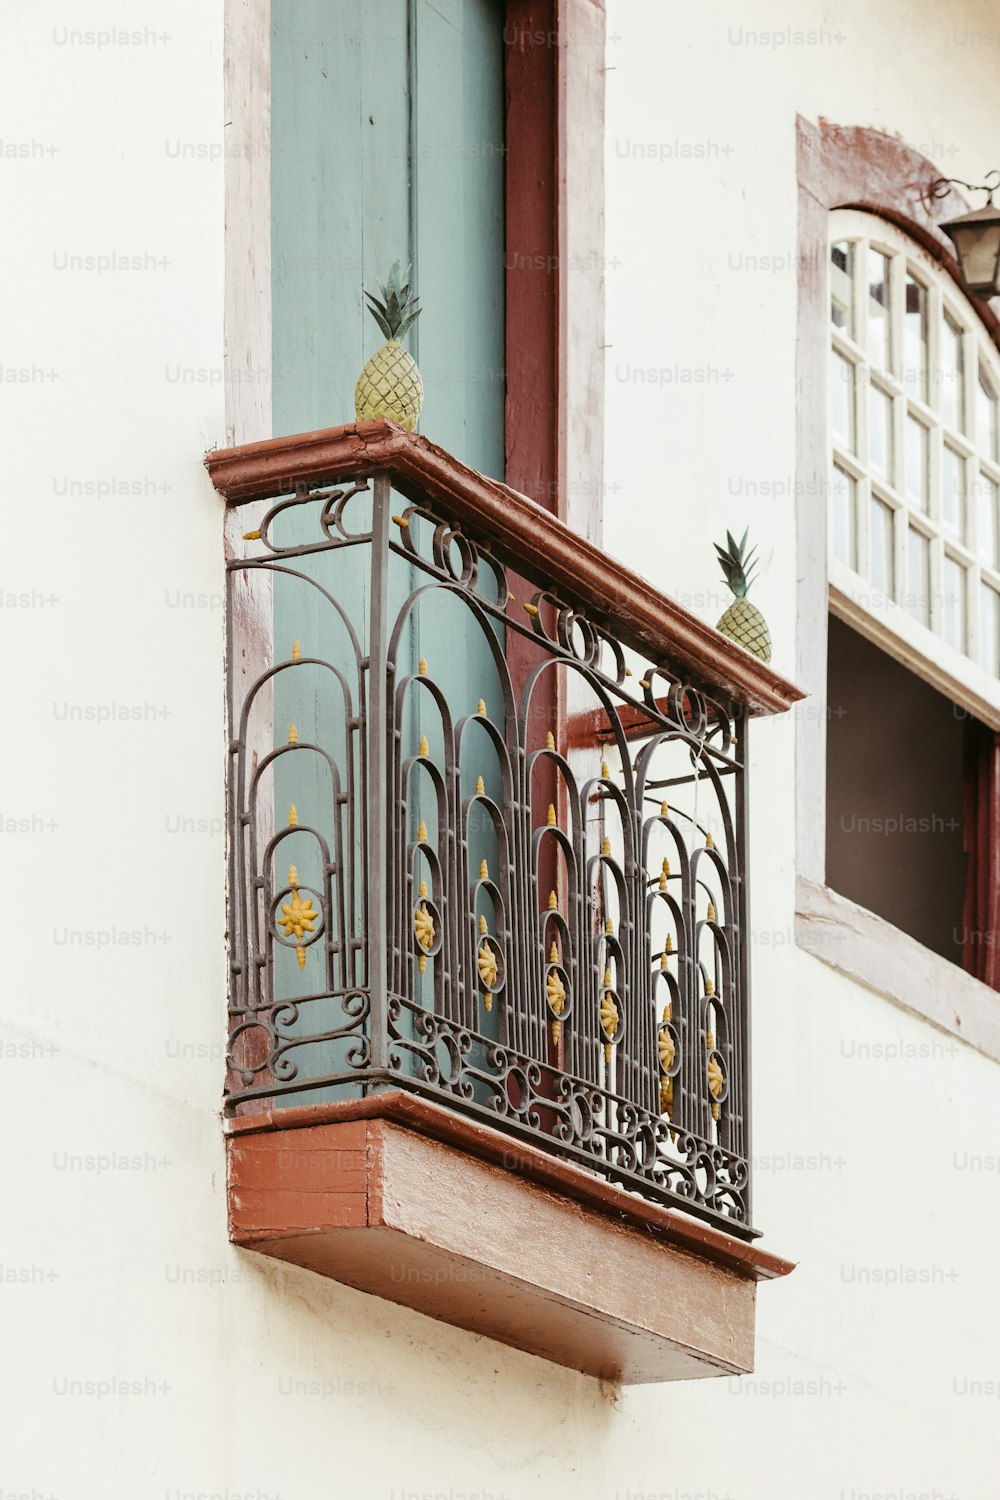 un balcon avec un ananas sur le dessus